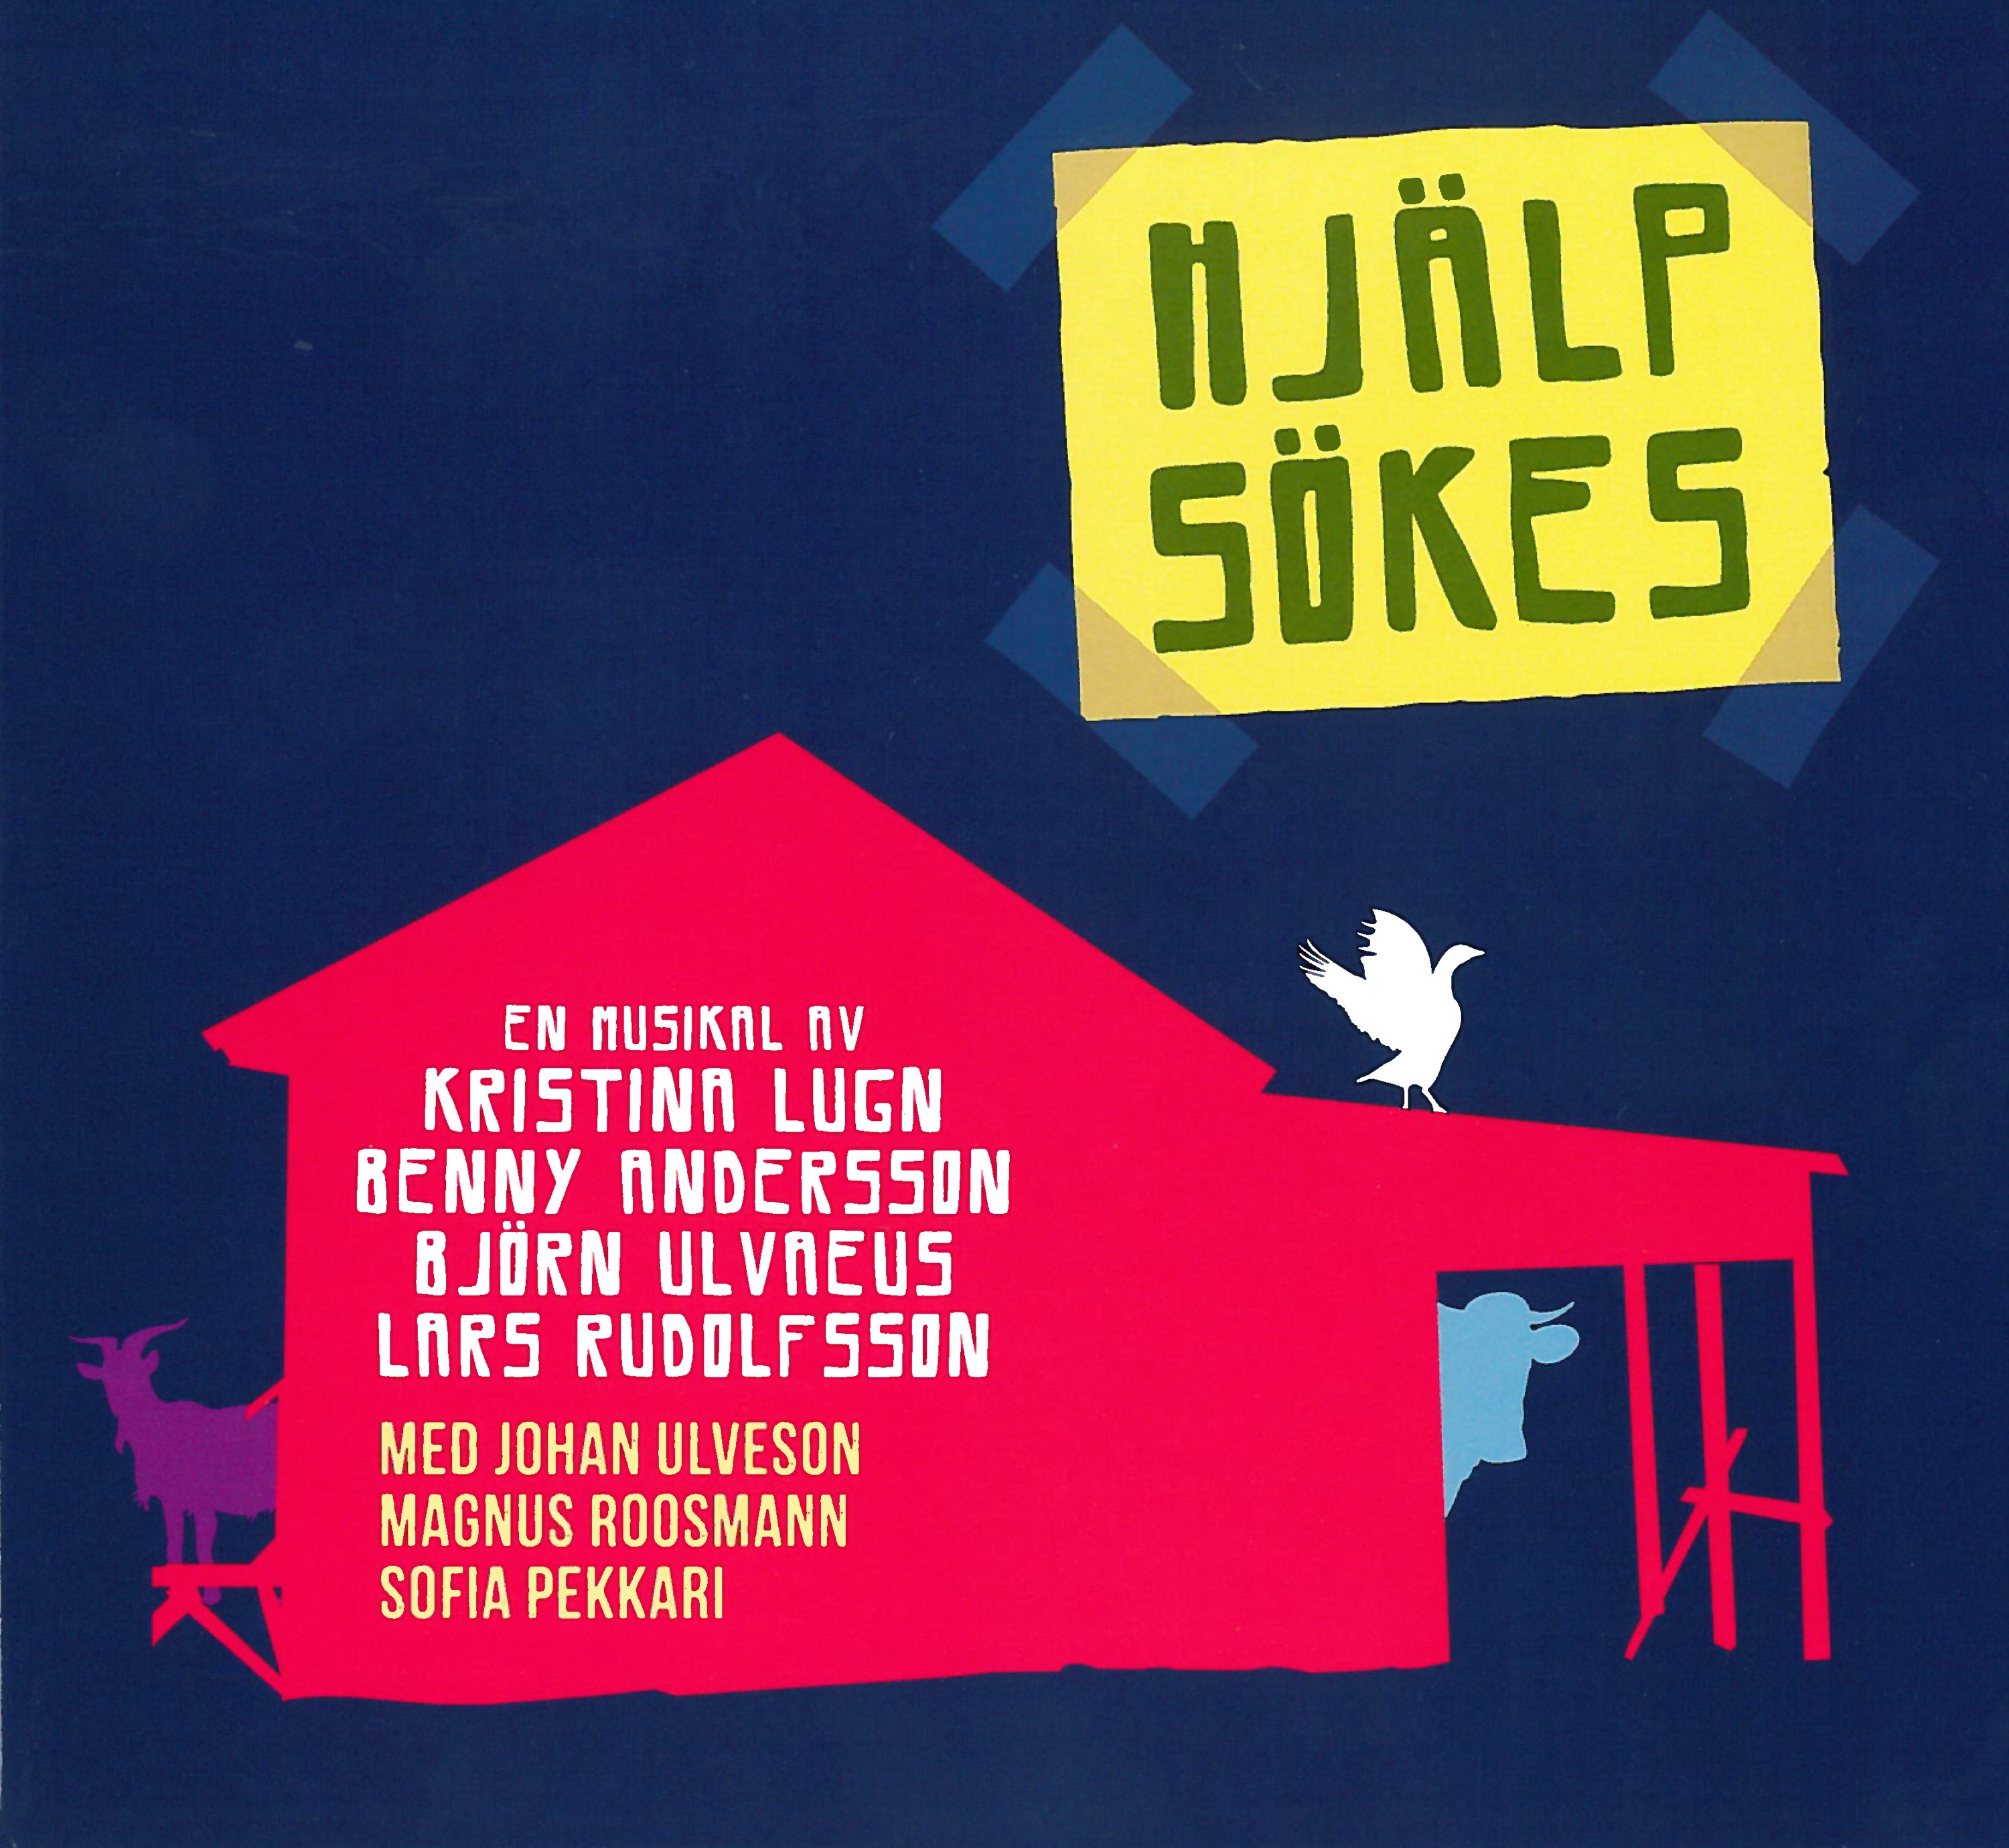 Johan Ulveson - Hj lp s kes (Musikal) - CD